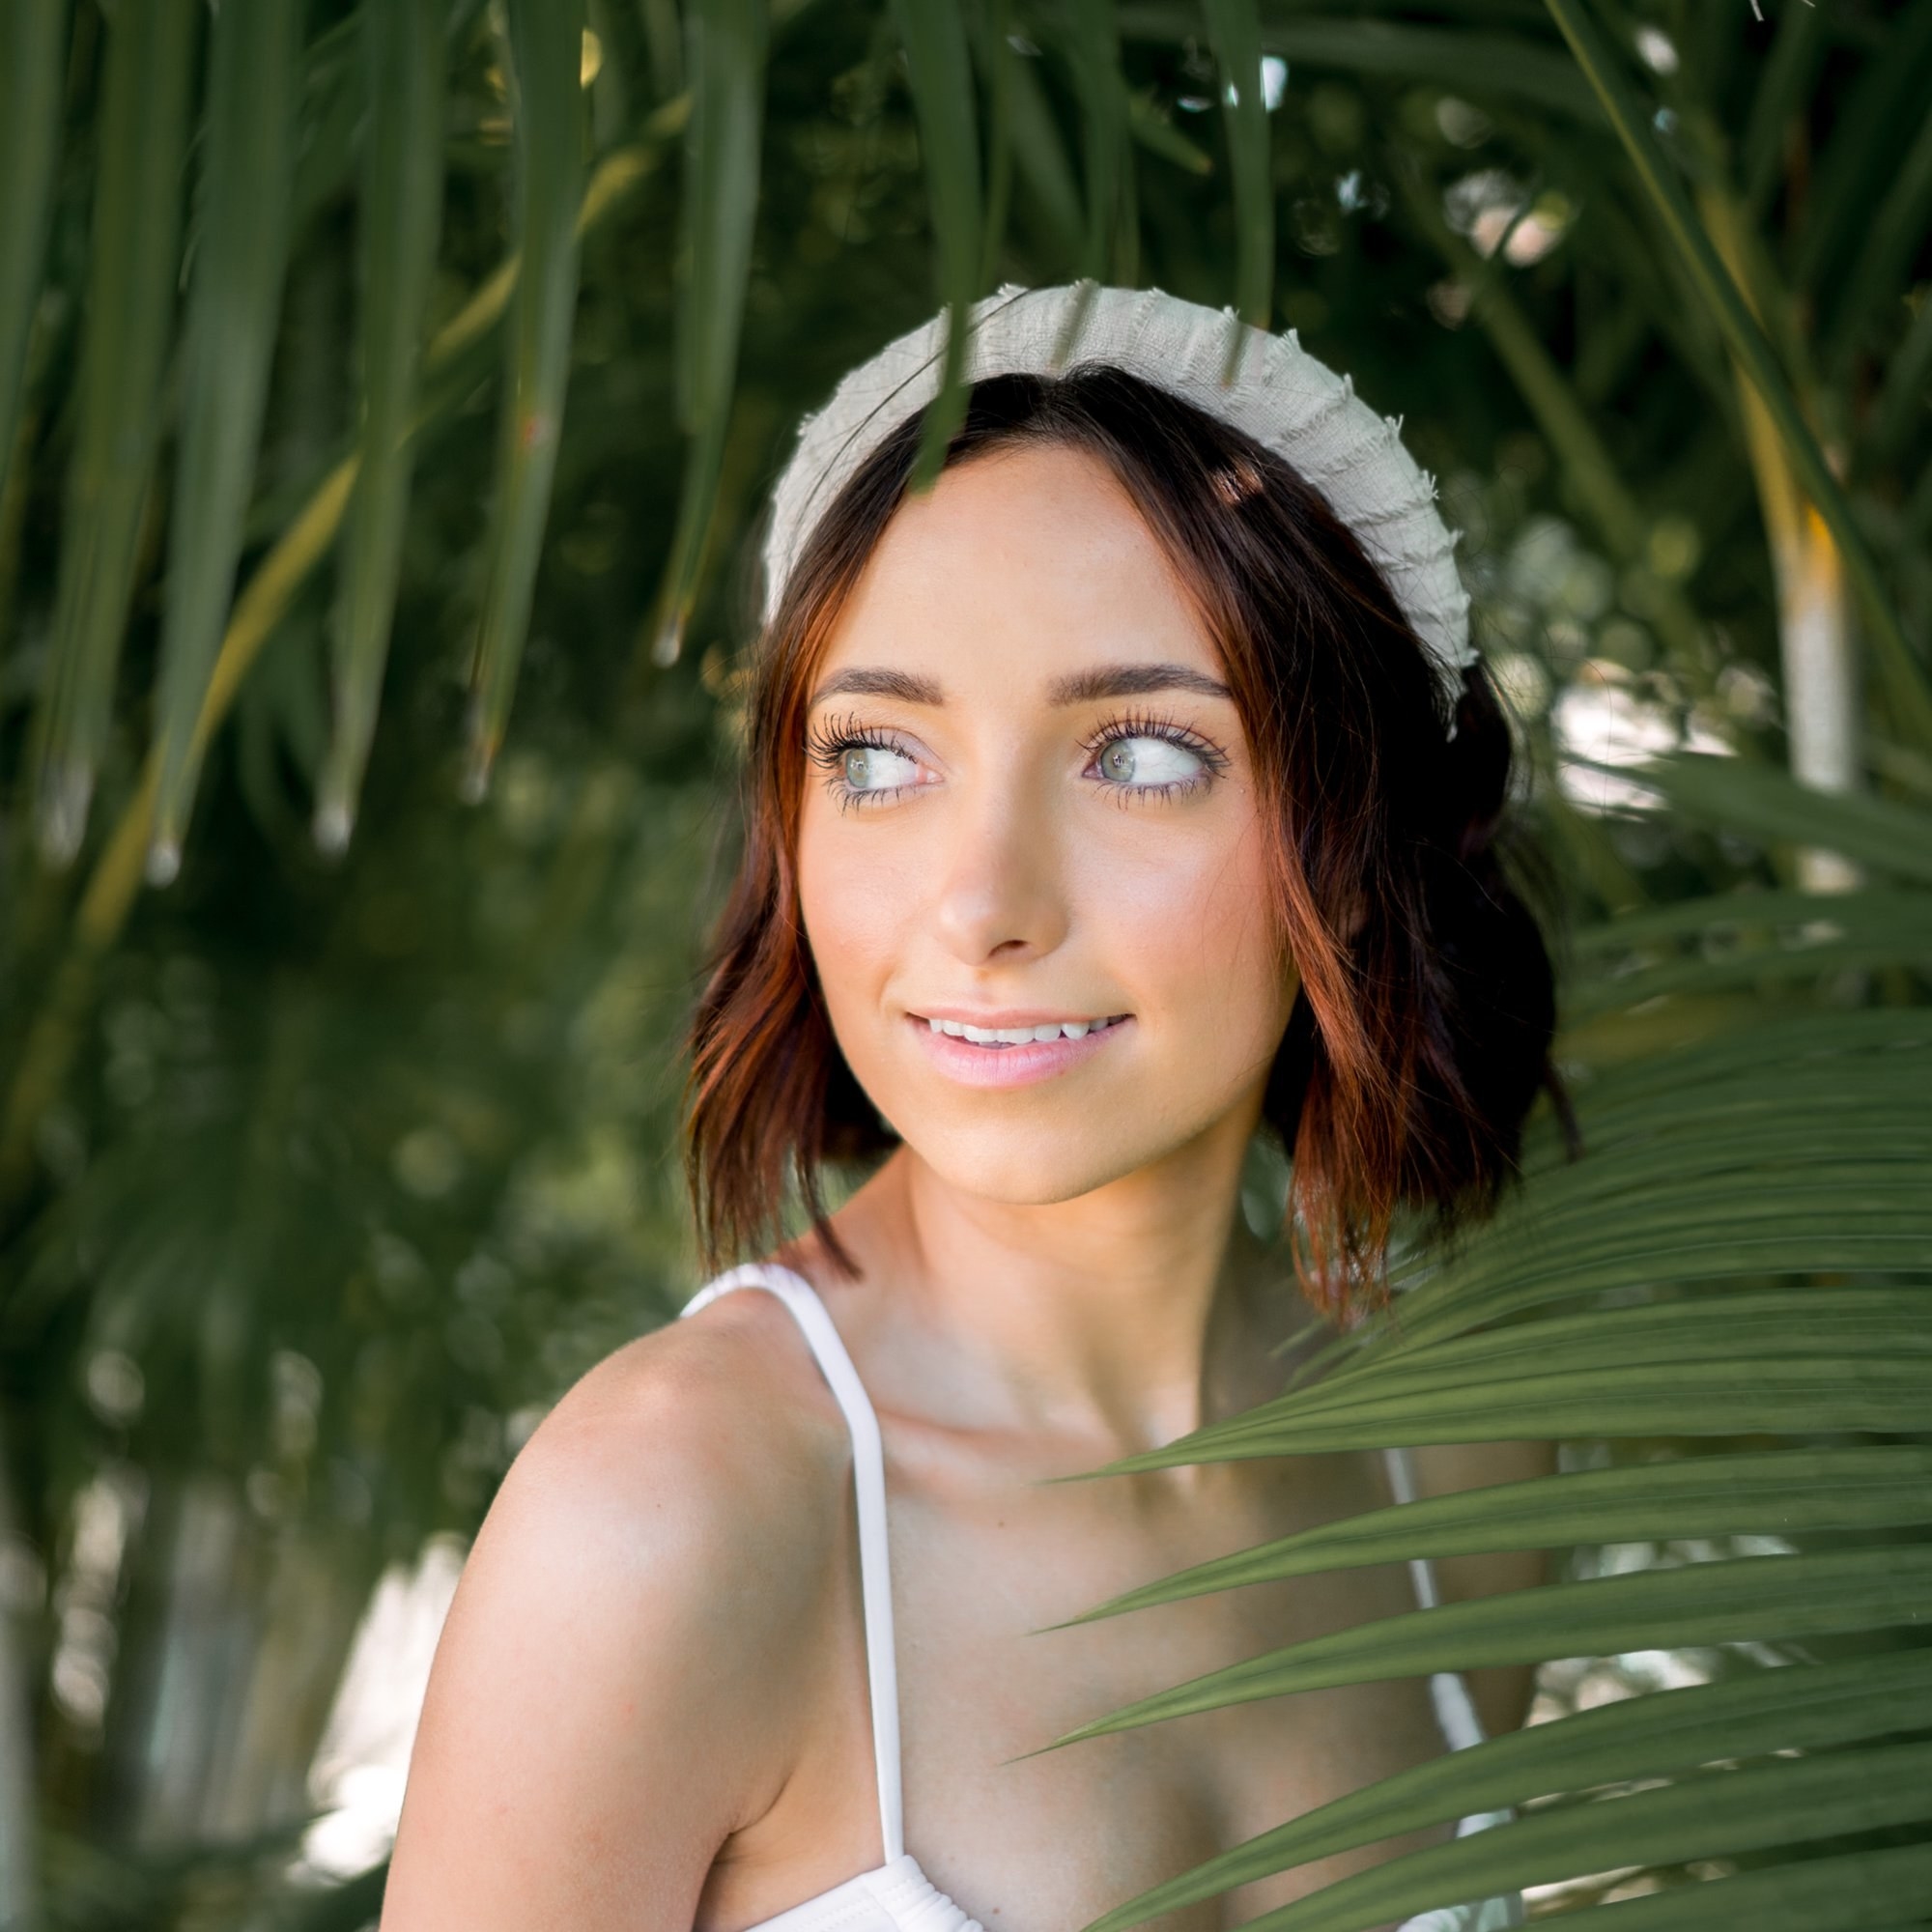 A model wearing the headband in a tropical scene